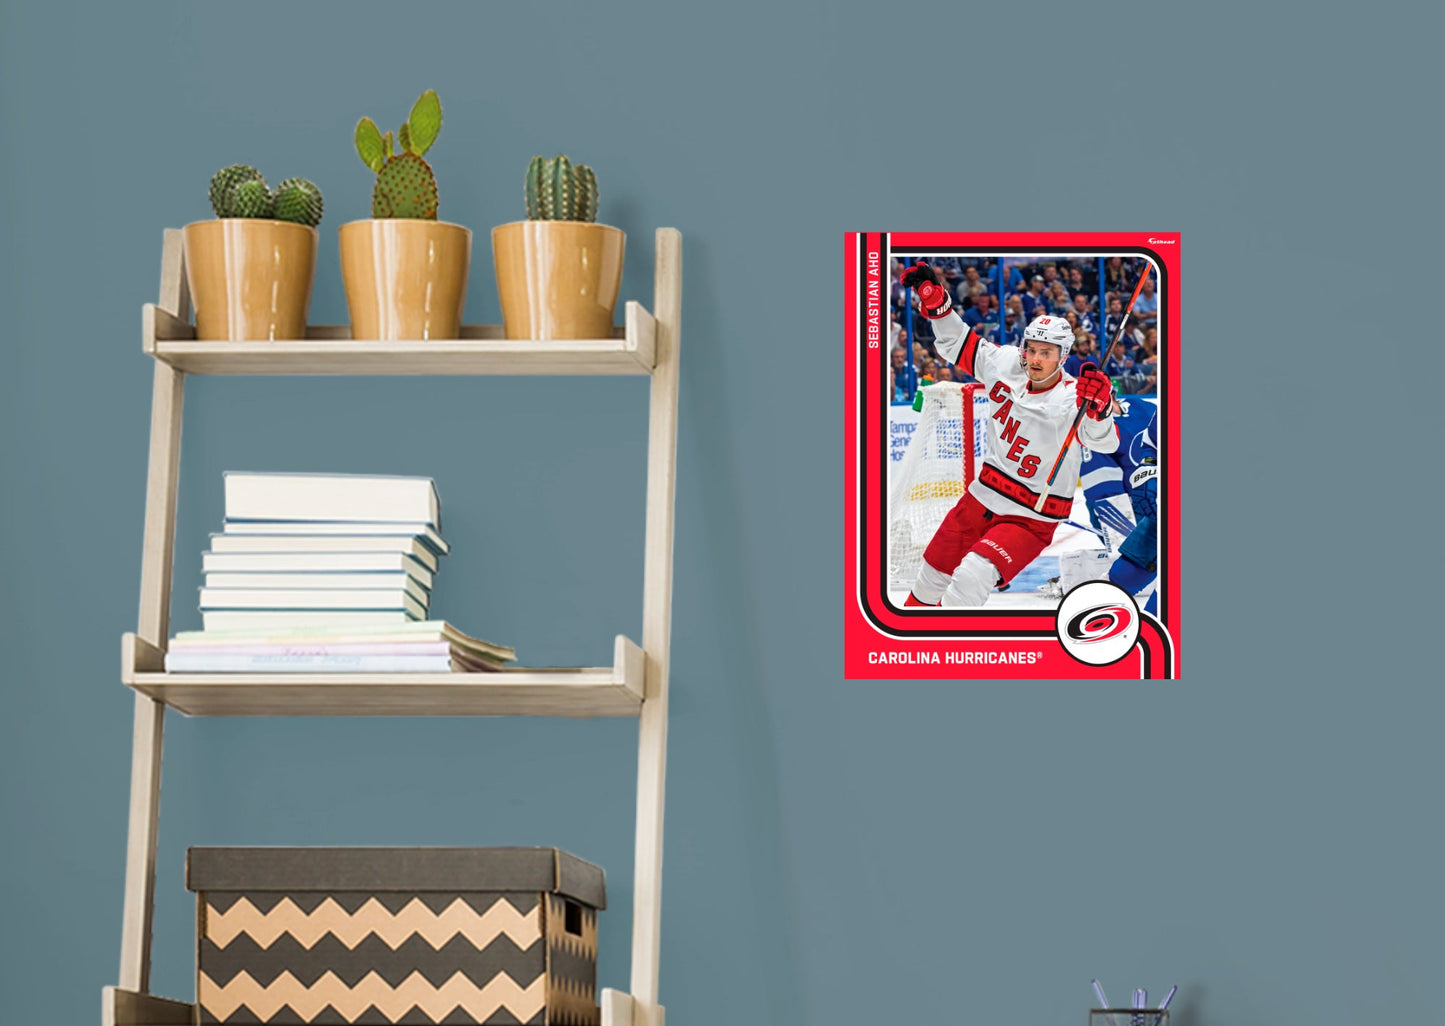 Carolina Hurricanes: Sebastian Aho Poster - Officially Licensed NHL Removable Adhesive Decal